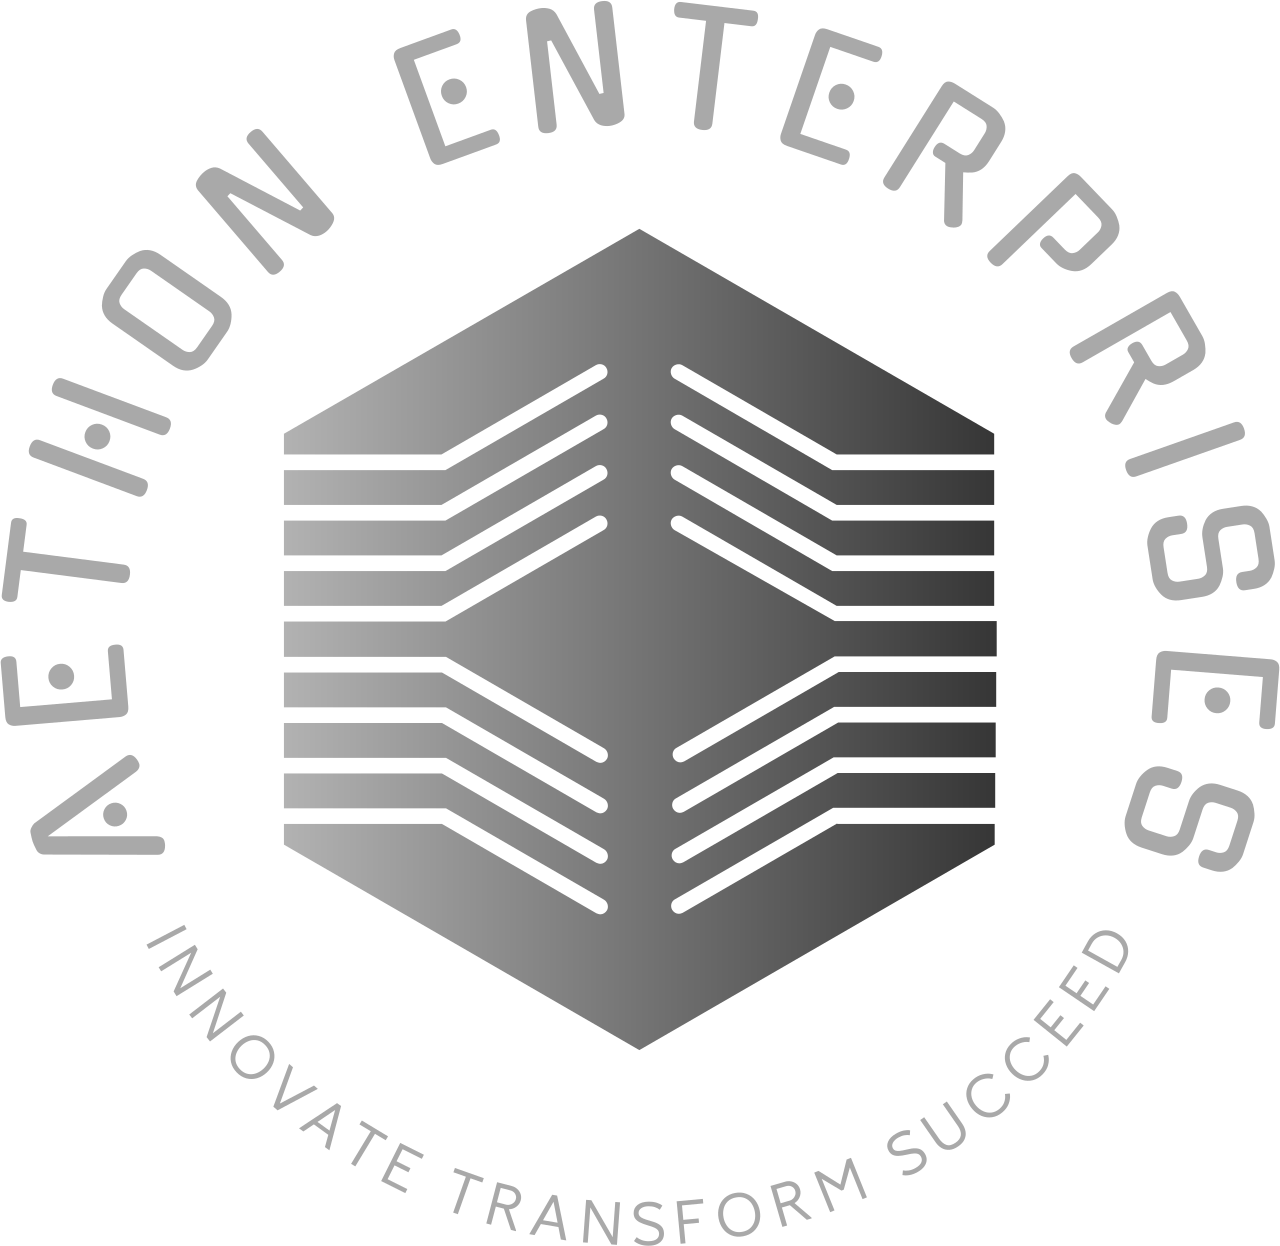 Aethon Enterprises's logo